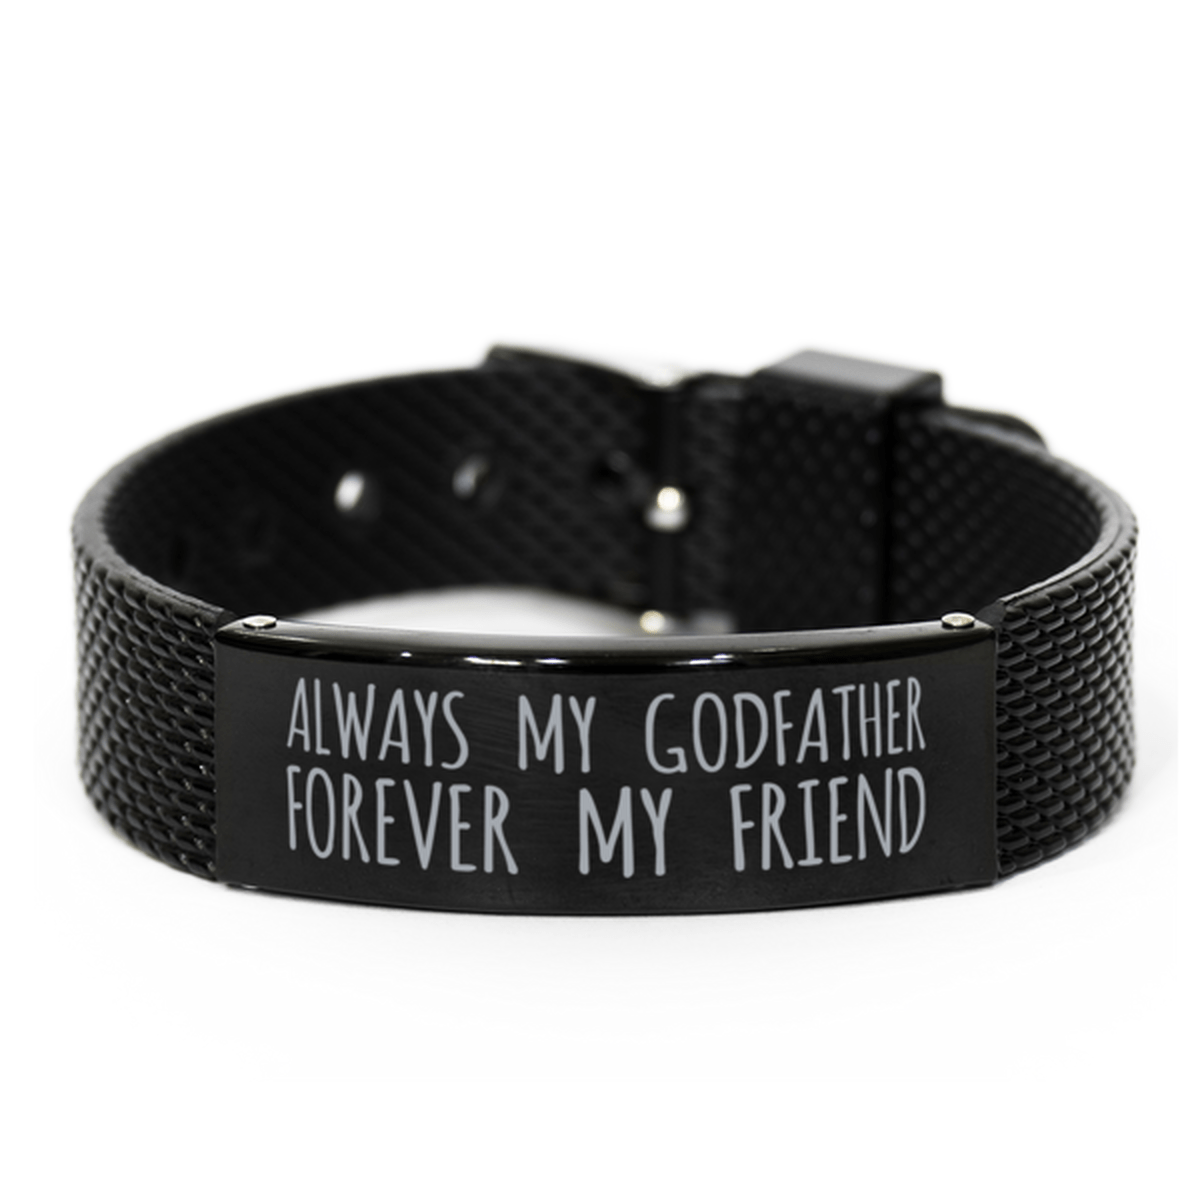 Inspirational Godfather Black Shark Mesh Bracelet, Always My Godfather Forever My Friend, Best Birthday Gifts for Family Friends